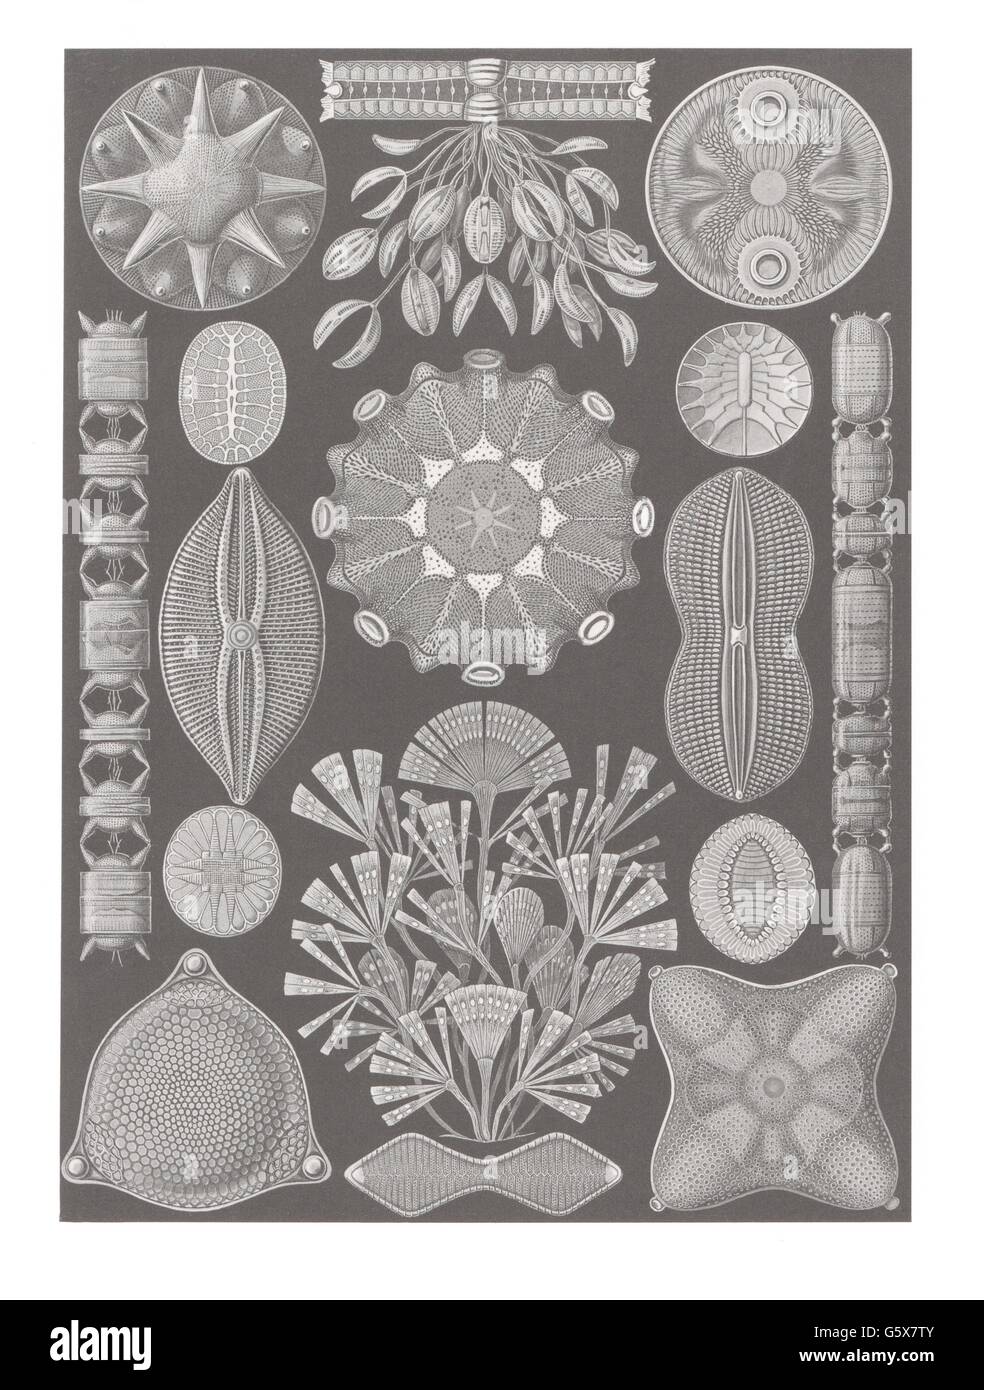 zoologie / Tiere, Kieselalgen (Diatomea), Farblithographie, aus: Ernst Haeckel, 'Kunstformen der Natur', Leipzig - Wien, 1899 - 1904, Additional-Rights-Clearences-not available Stockfoto